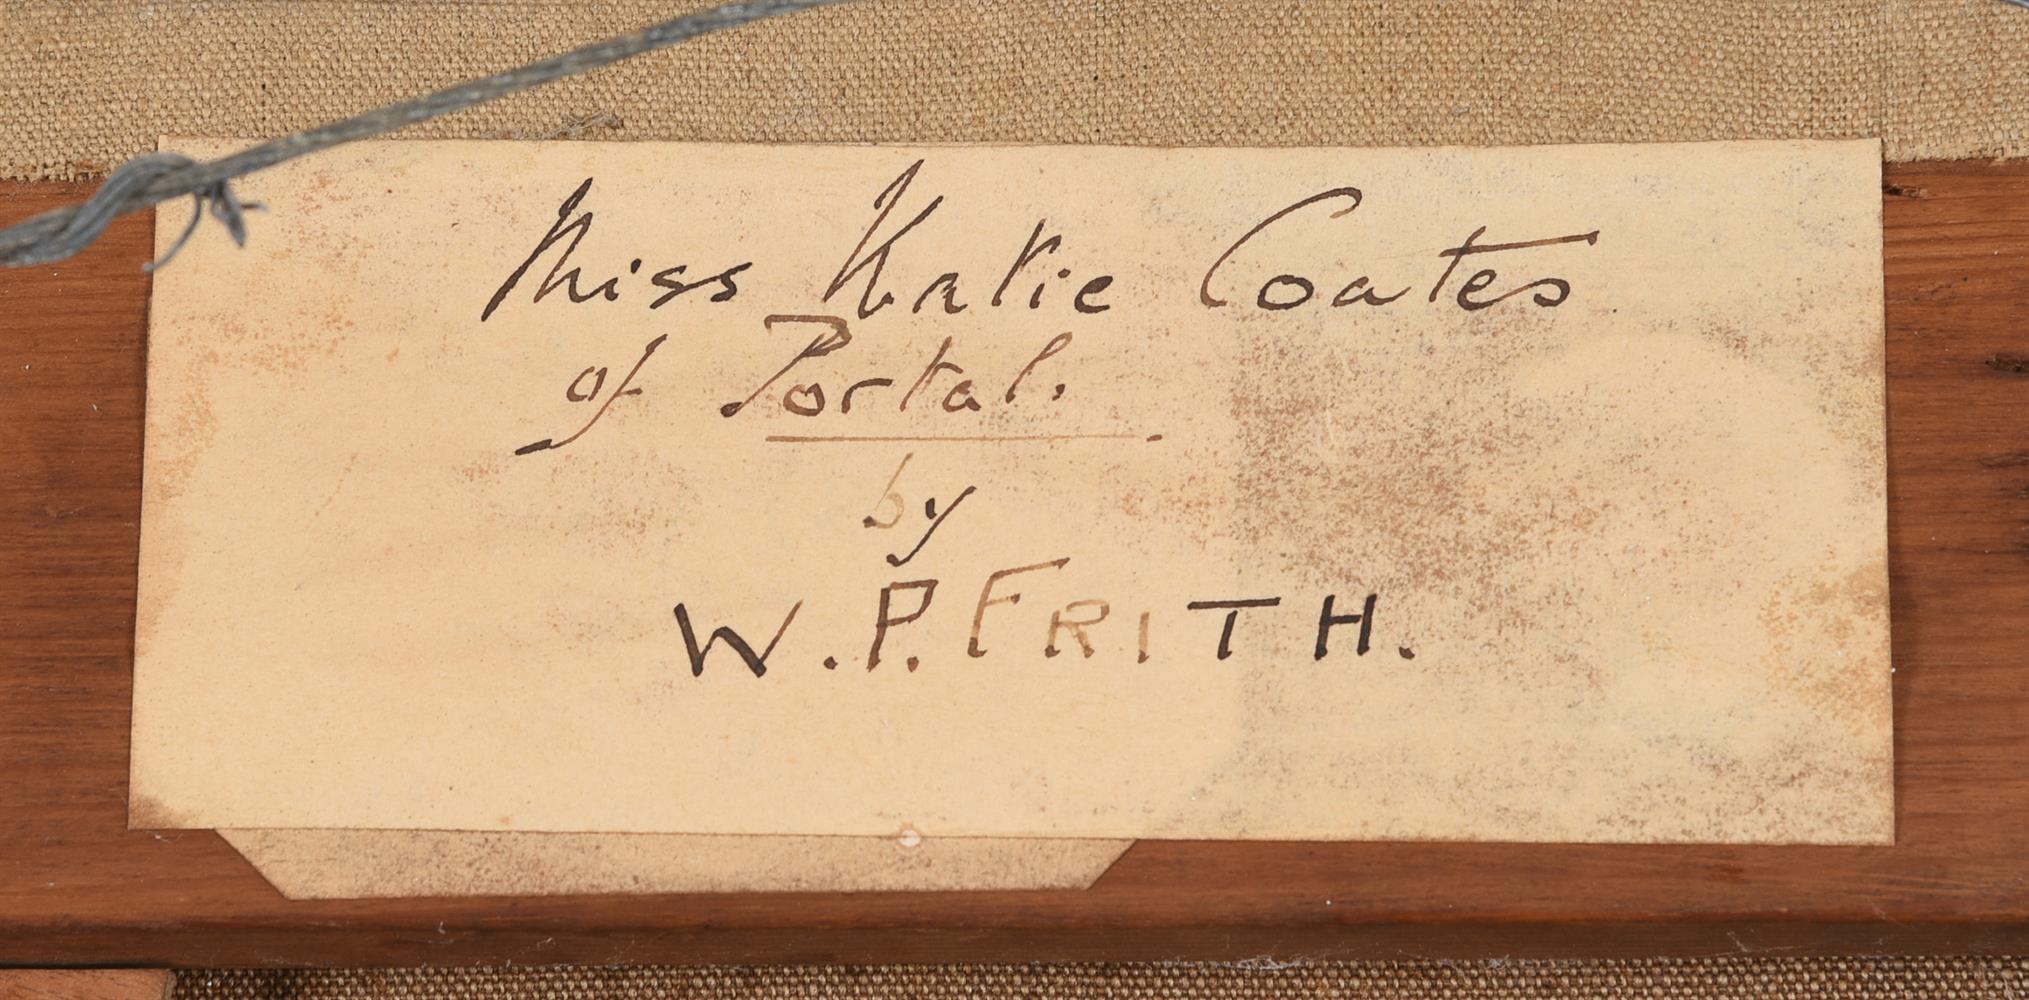 WILLIAM POWELL FRITH (BRITISH 1819-1909), MISS KATIE COATES, THE HOUSEKEEPER AT PORTAL, 1853 - Bild 6 aus 6